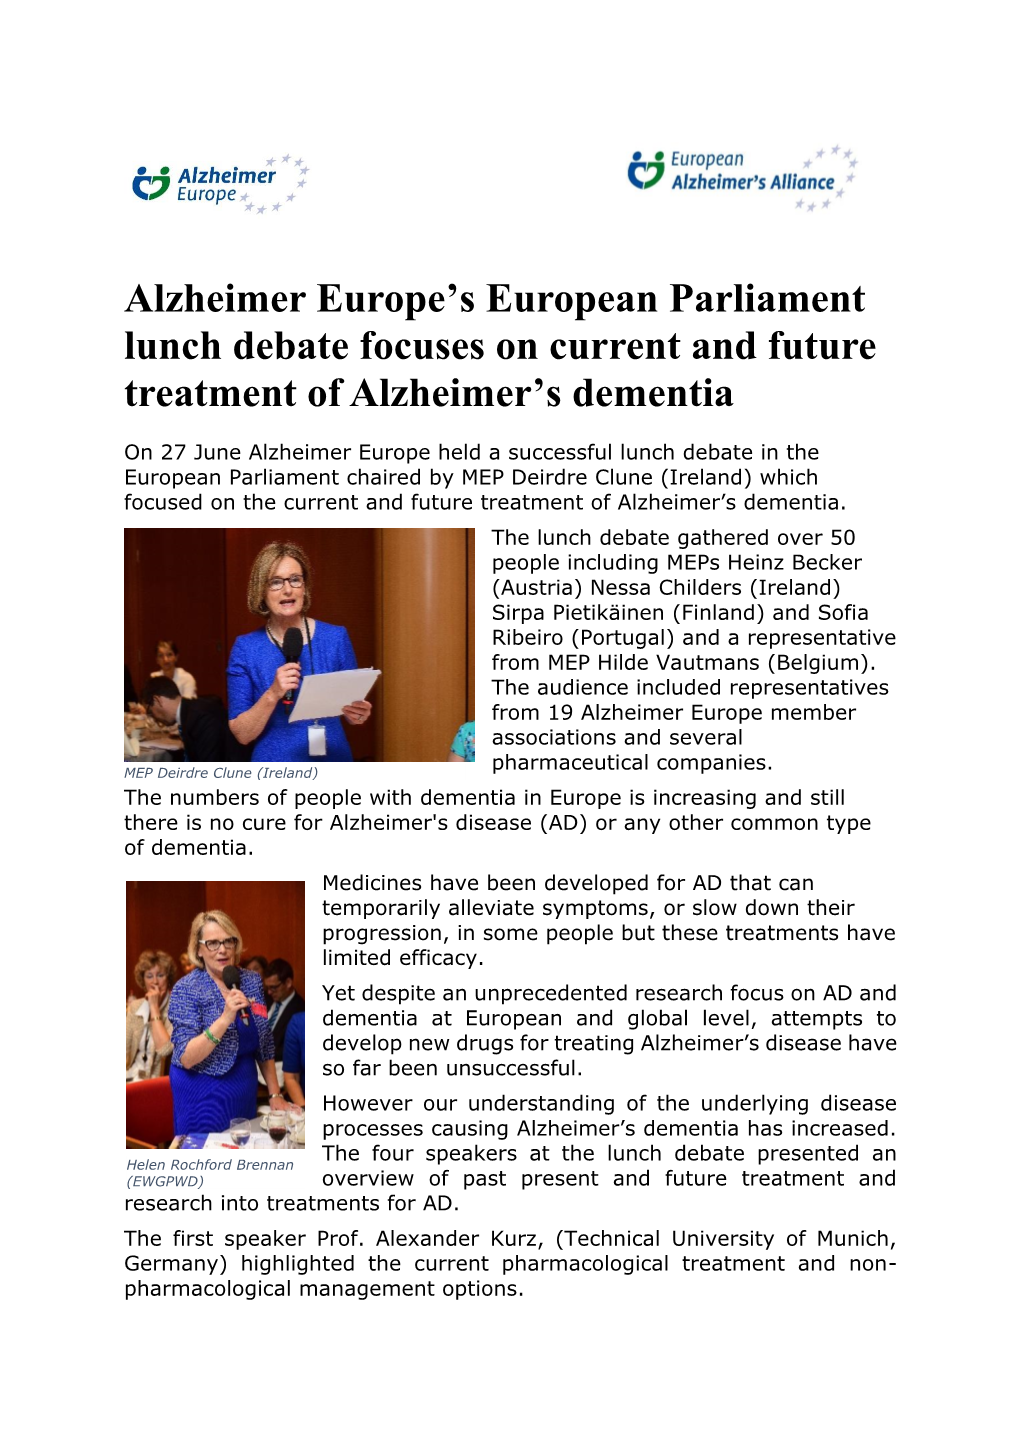 Alzheimer Europe's European Parliament Lunch Debate Focuses On